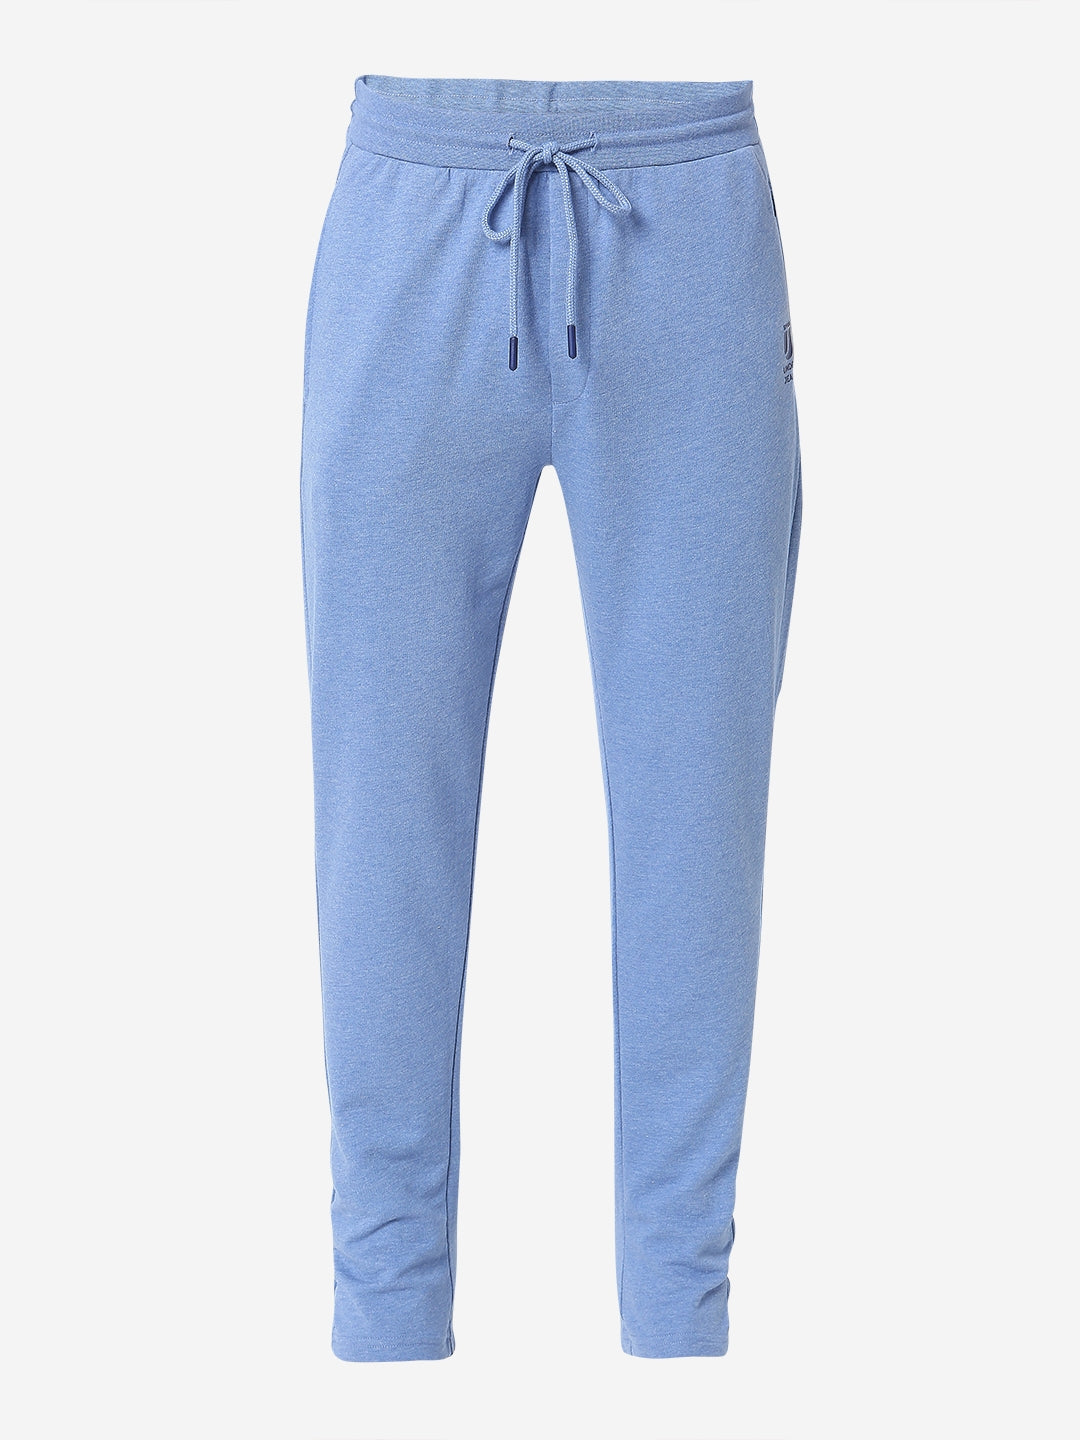 Underjeans by Spykar Men Premium Knitted Blue Melange Pyjama